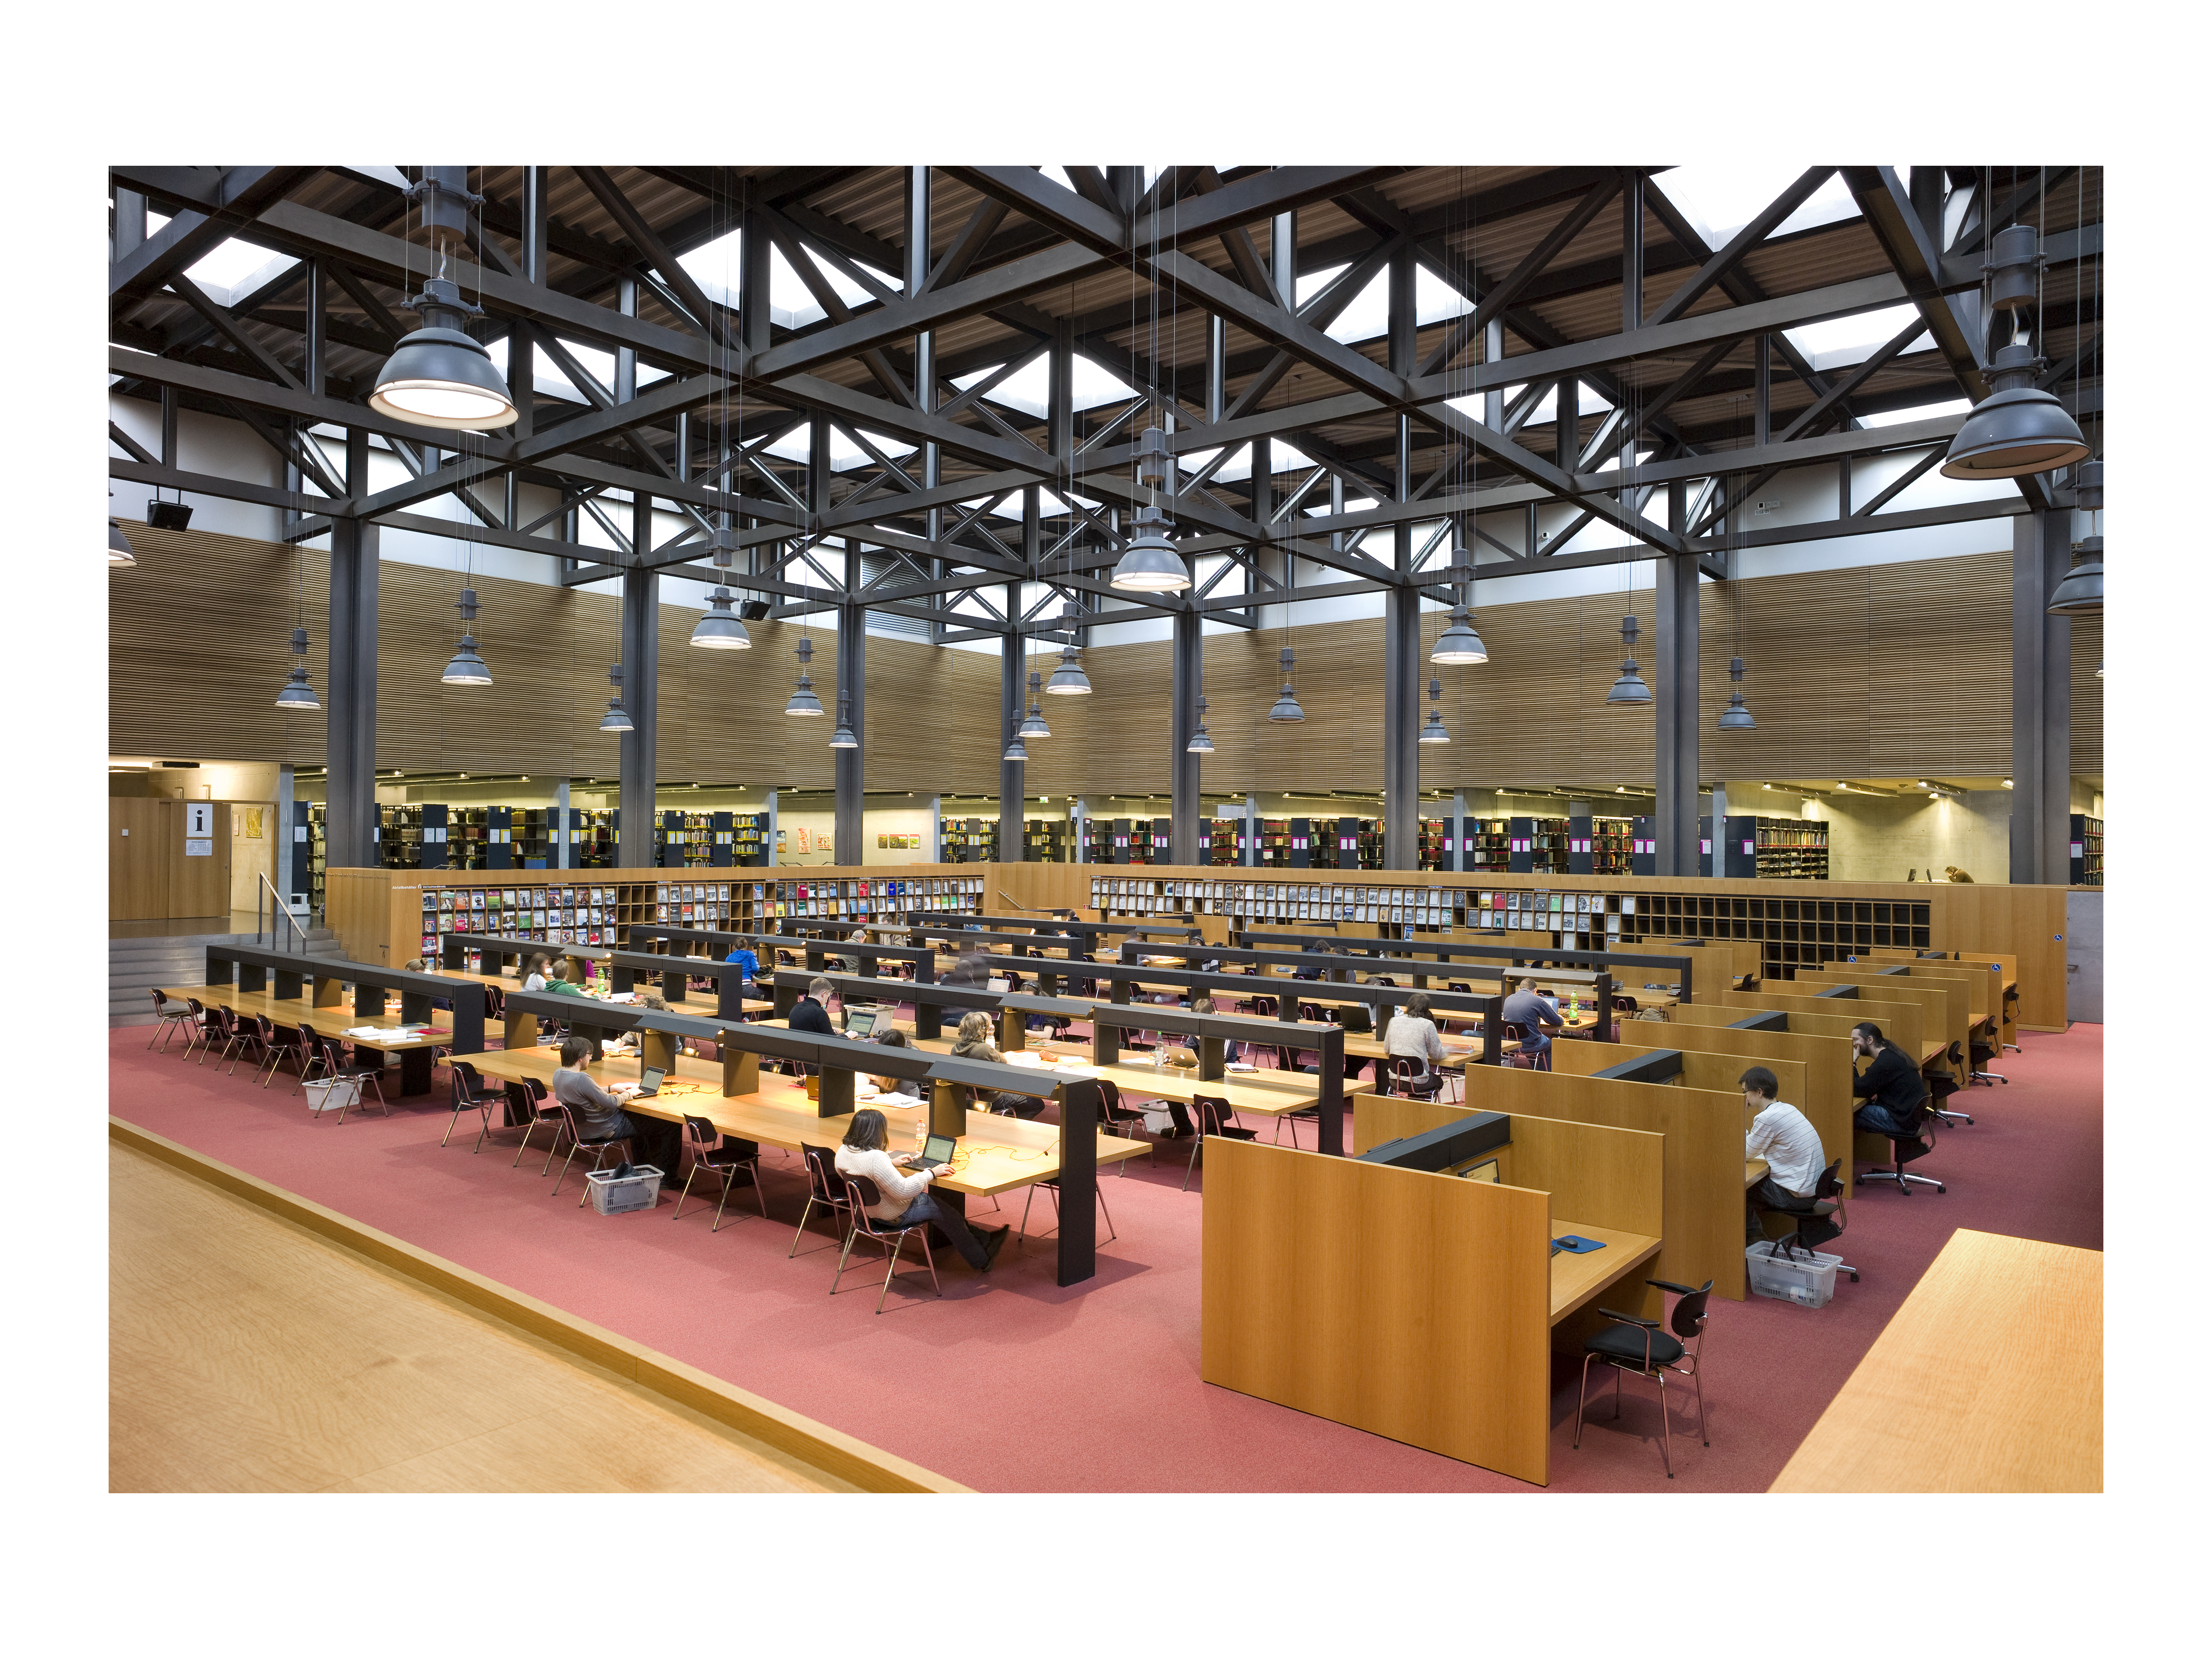 Humboldt-Universität zu Berlin - Universitätsbibliothek - Erwin-Schrödinger-Zentrum - Lesesaal 1 